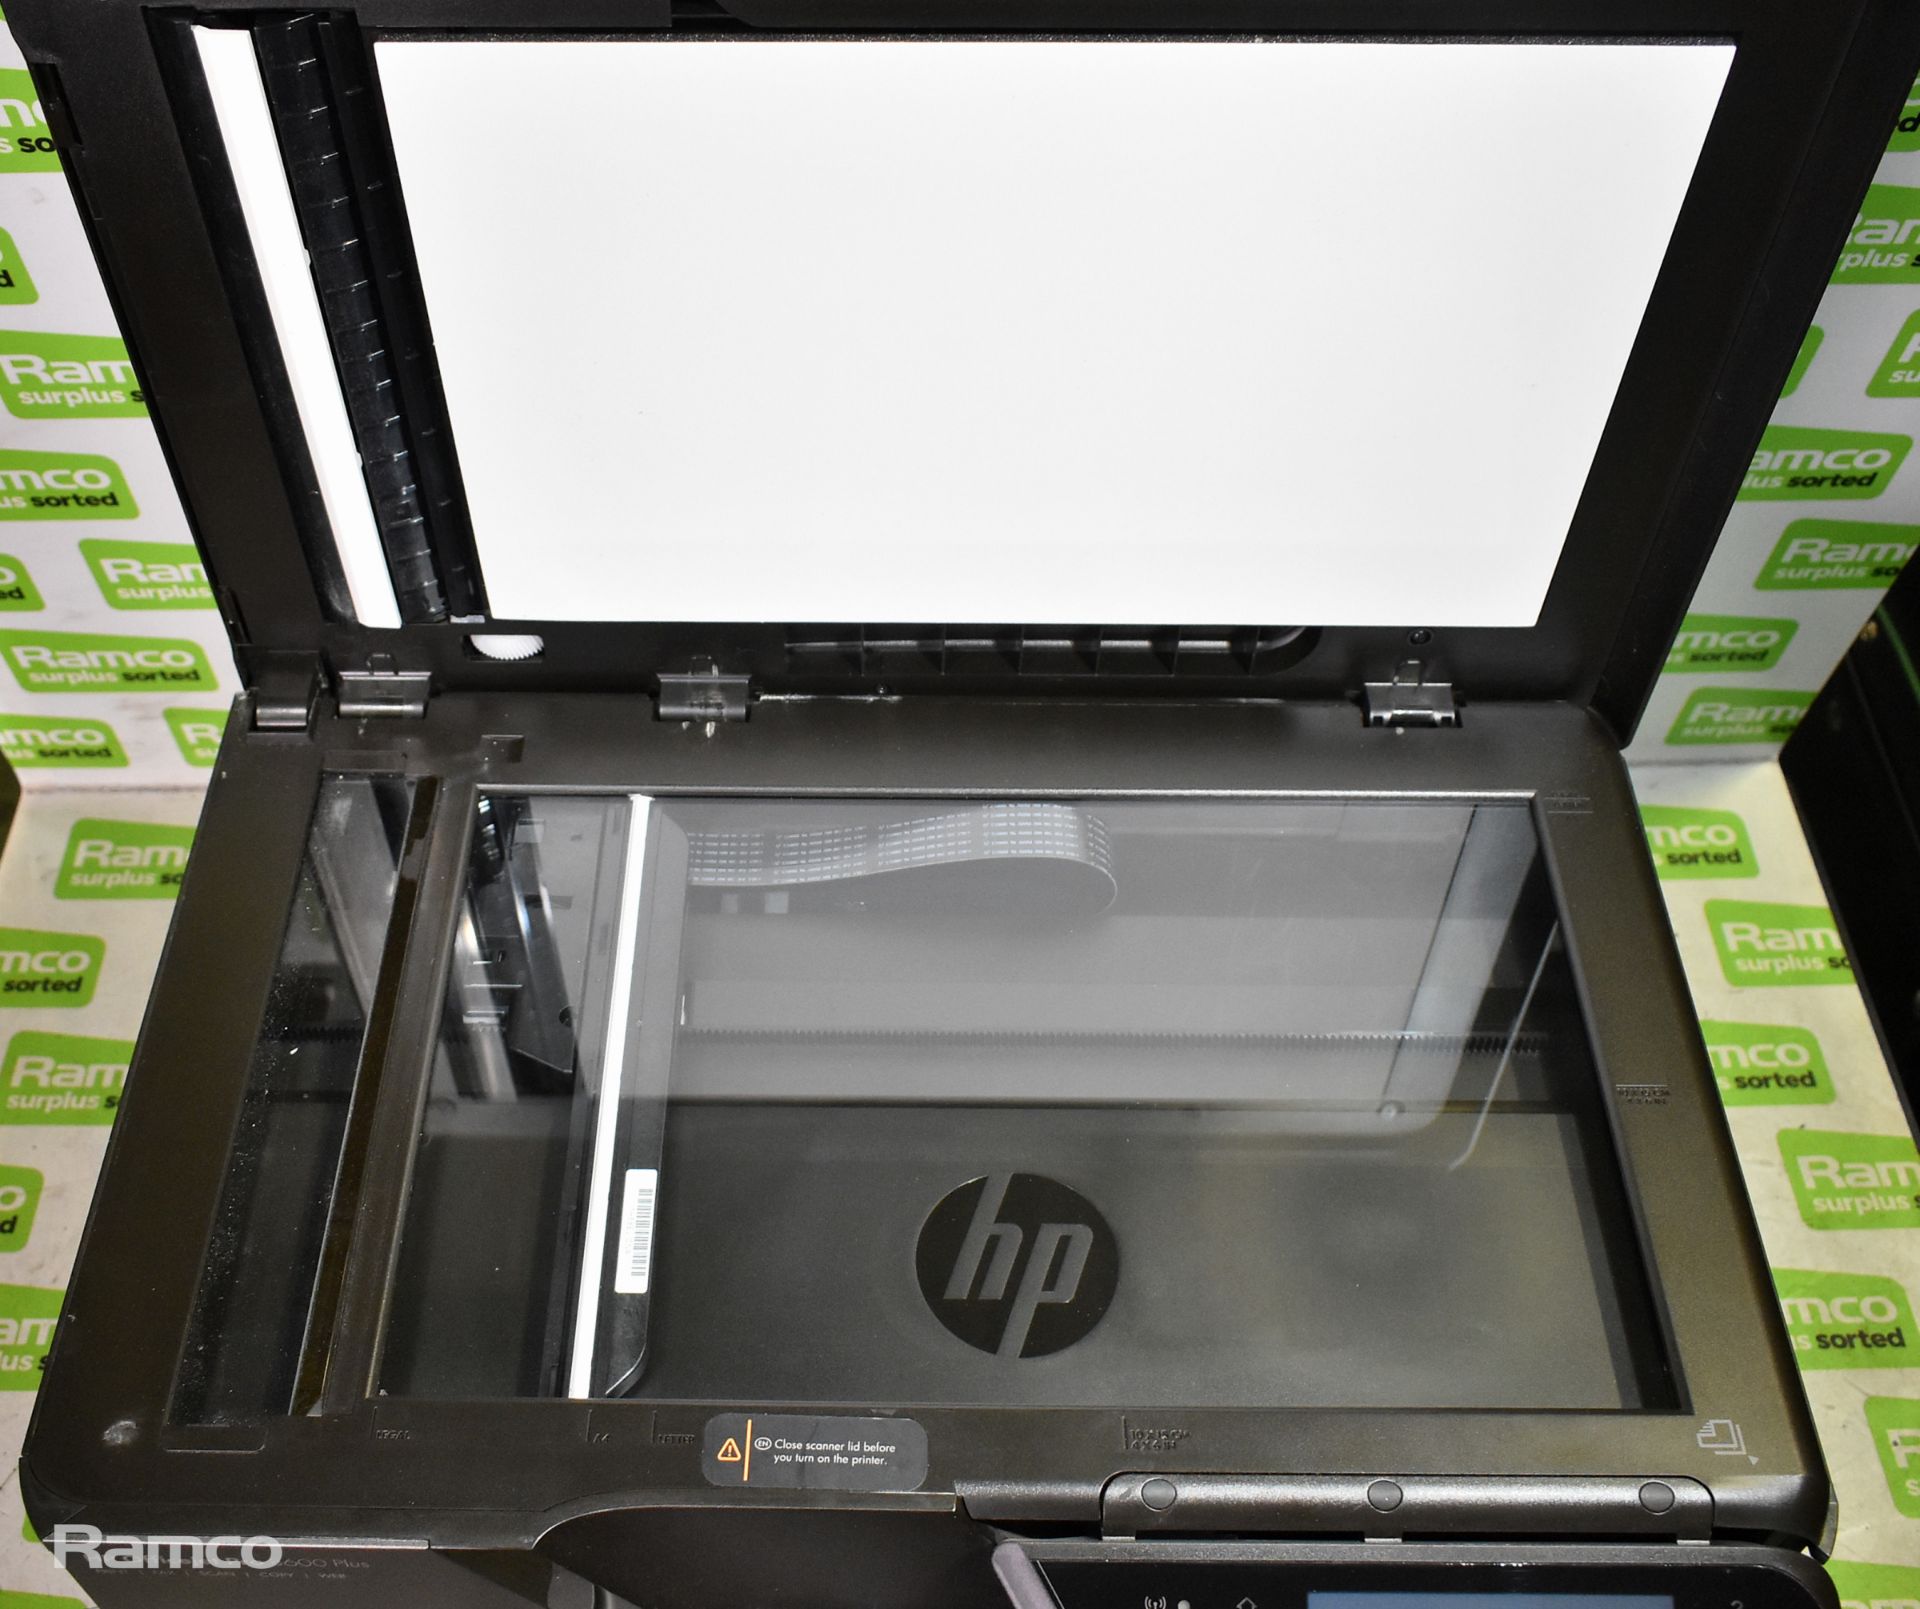 HP Officejet Pro 8600 Plus printer - printer head fault - Image 4 of 12